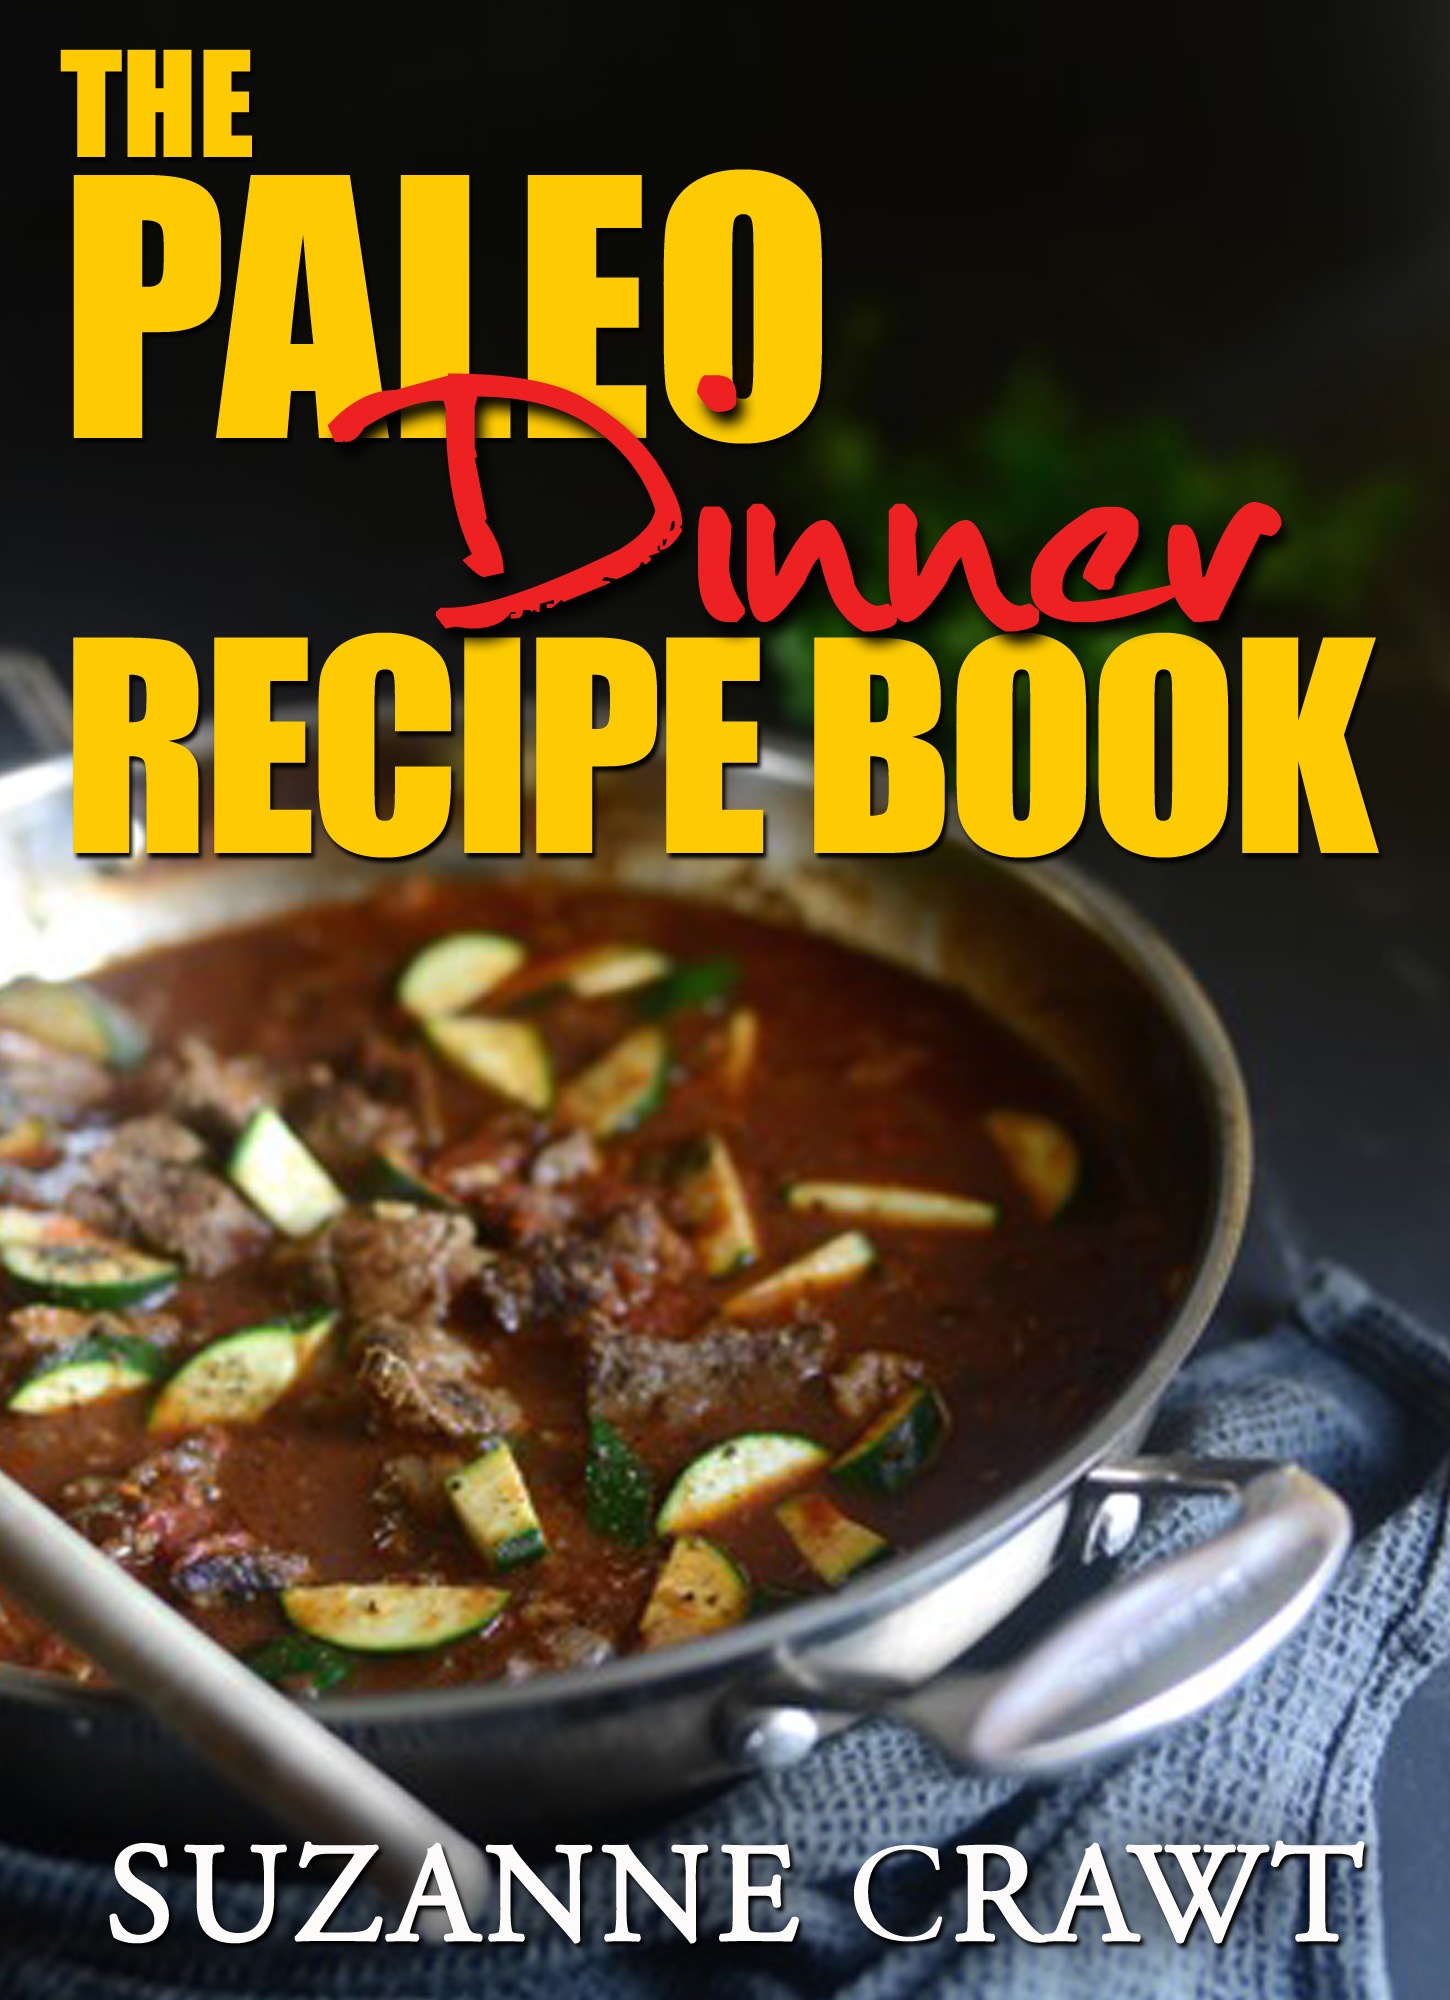 The Paleo Dinner Recipe Book - The Paleo Network